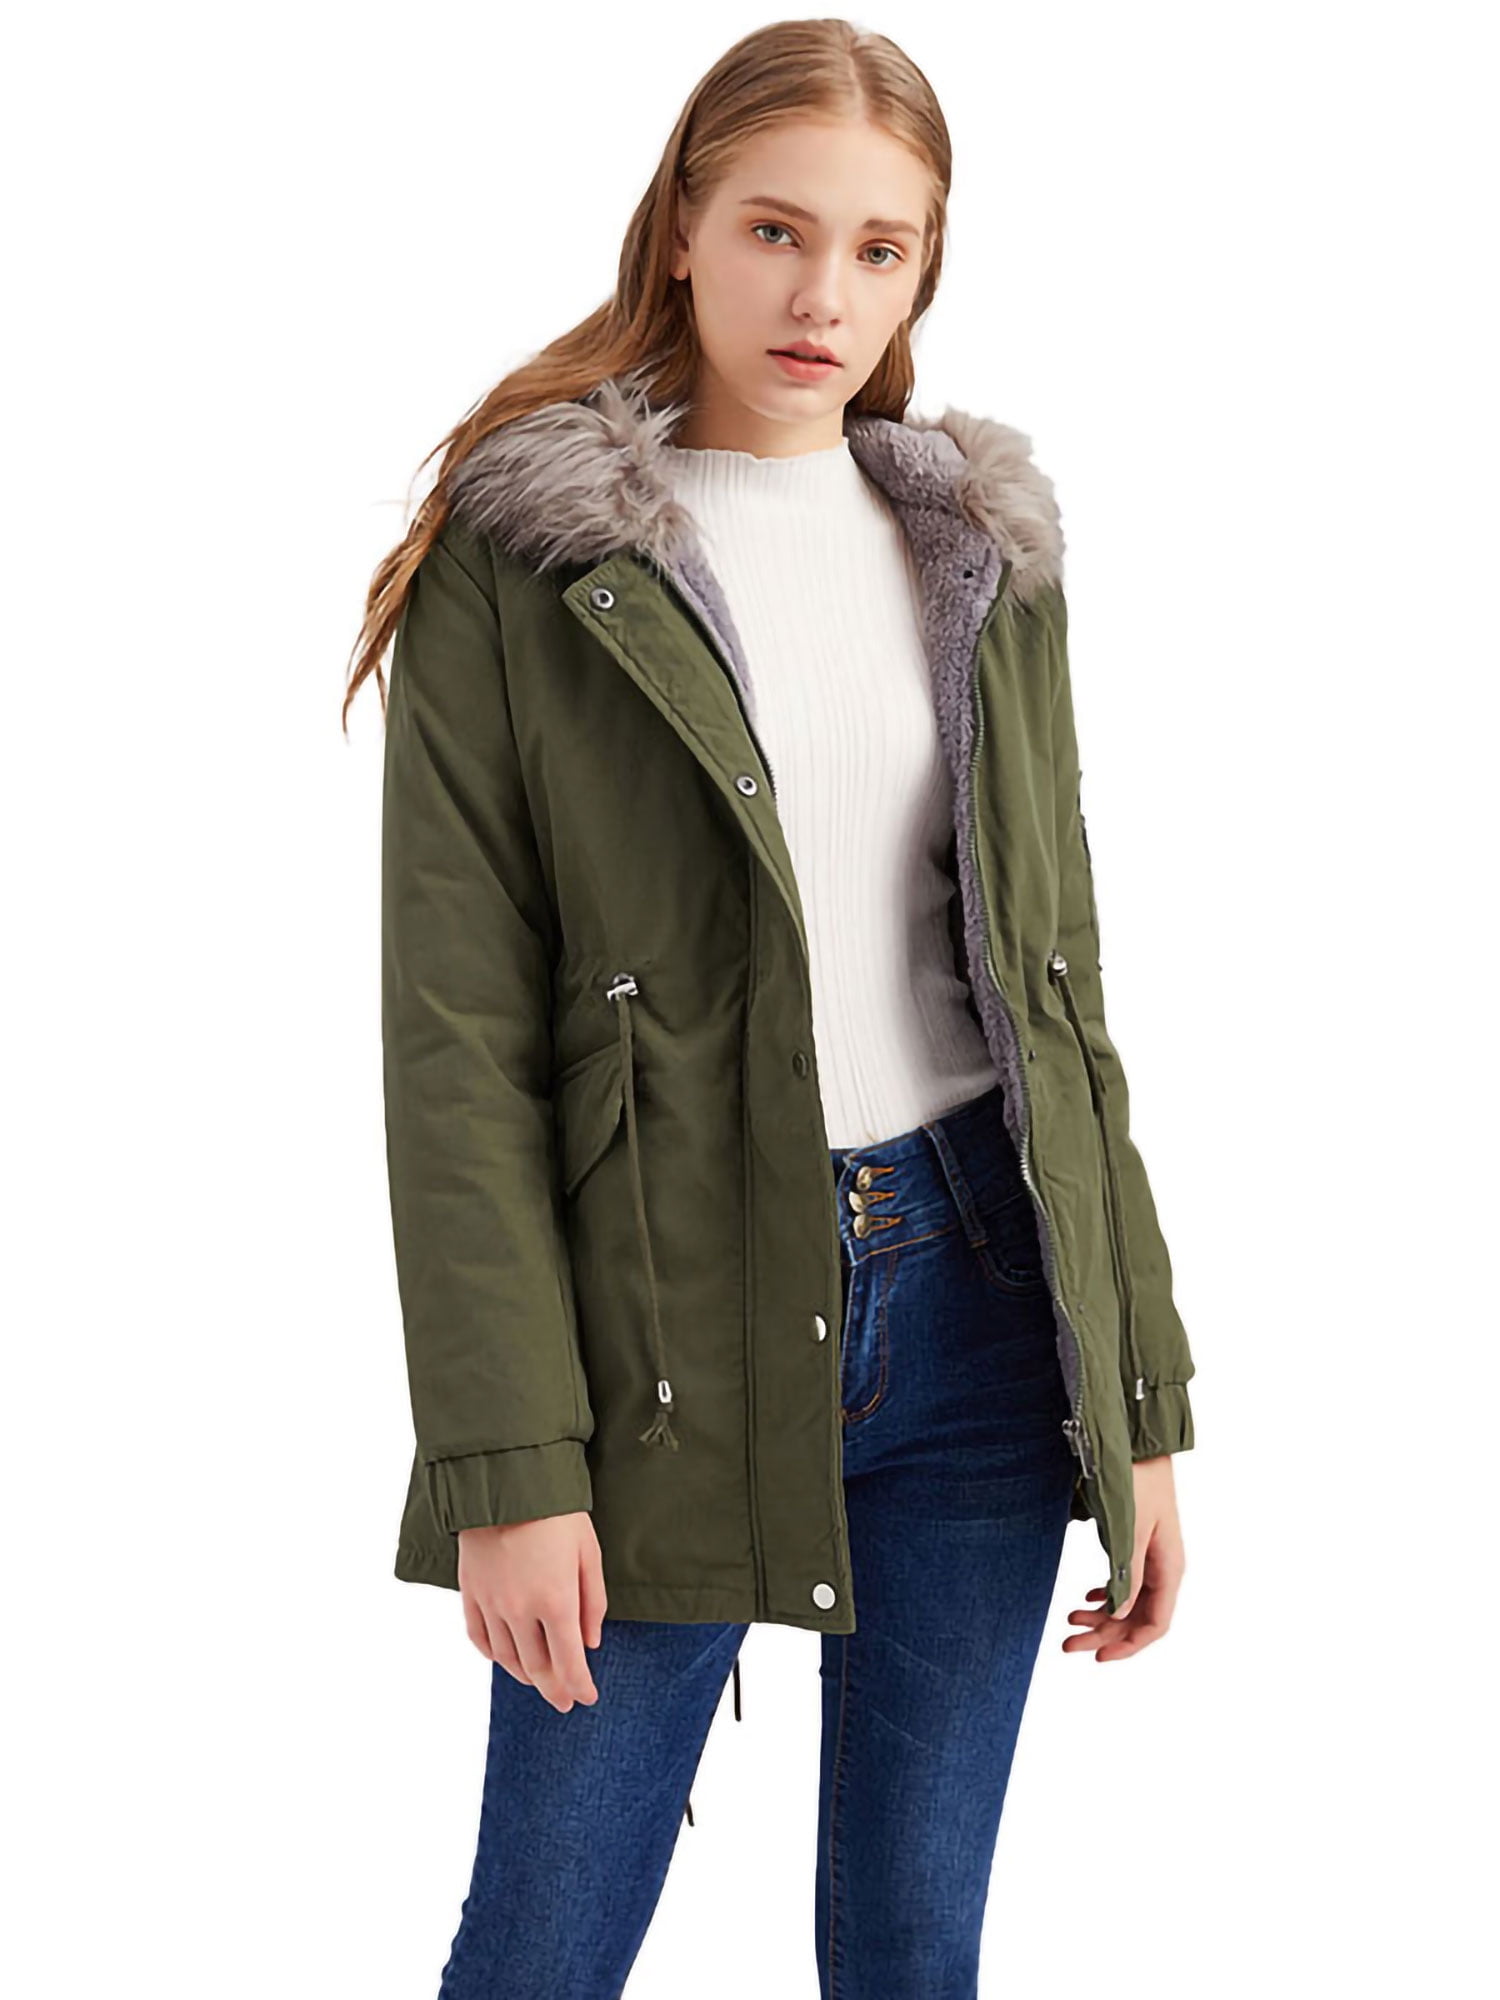 Baby Girl Army Green Fur Hooded Jacket Padded Long Coat Thick Warm Jacket Parka 